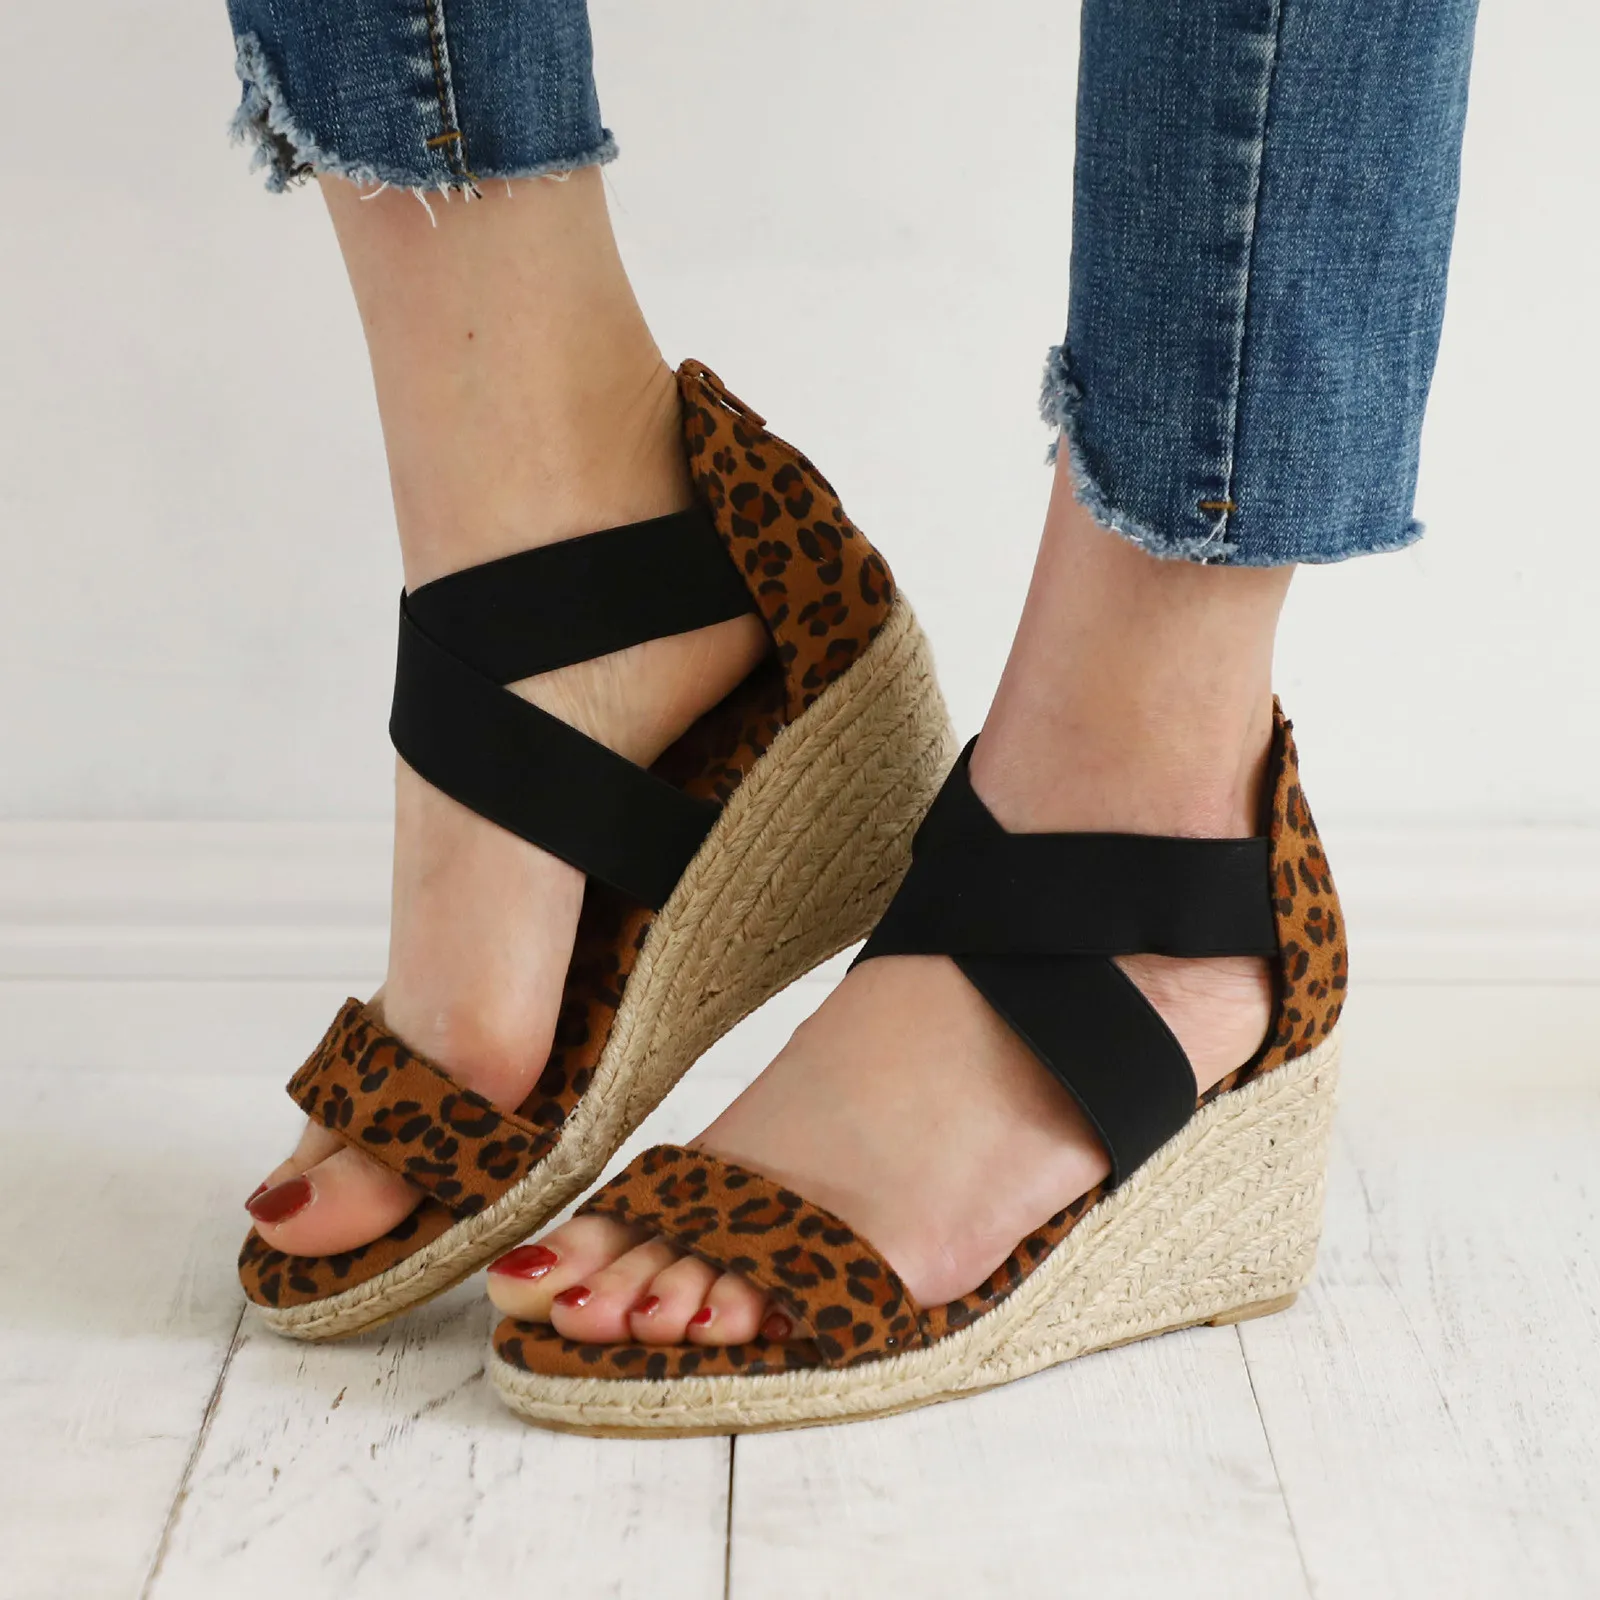 Women's Summer Casual Leopard Open Toe Platforms Sandals Wedges High Heel Shoes 